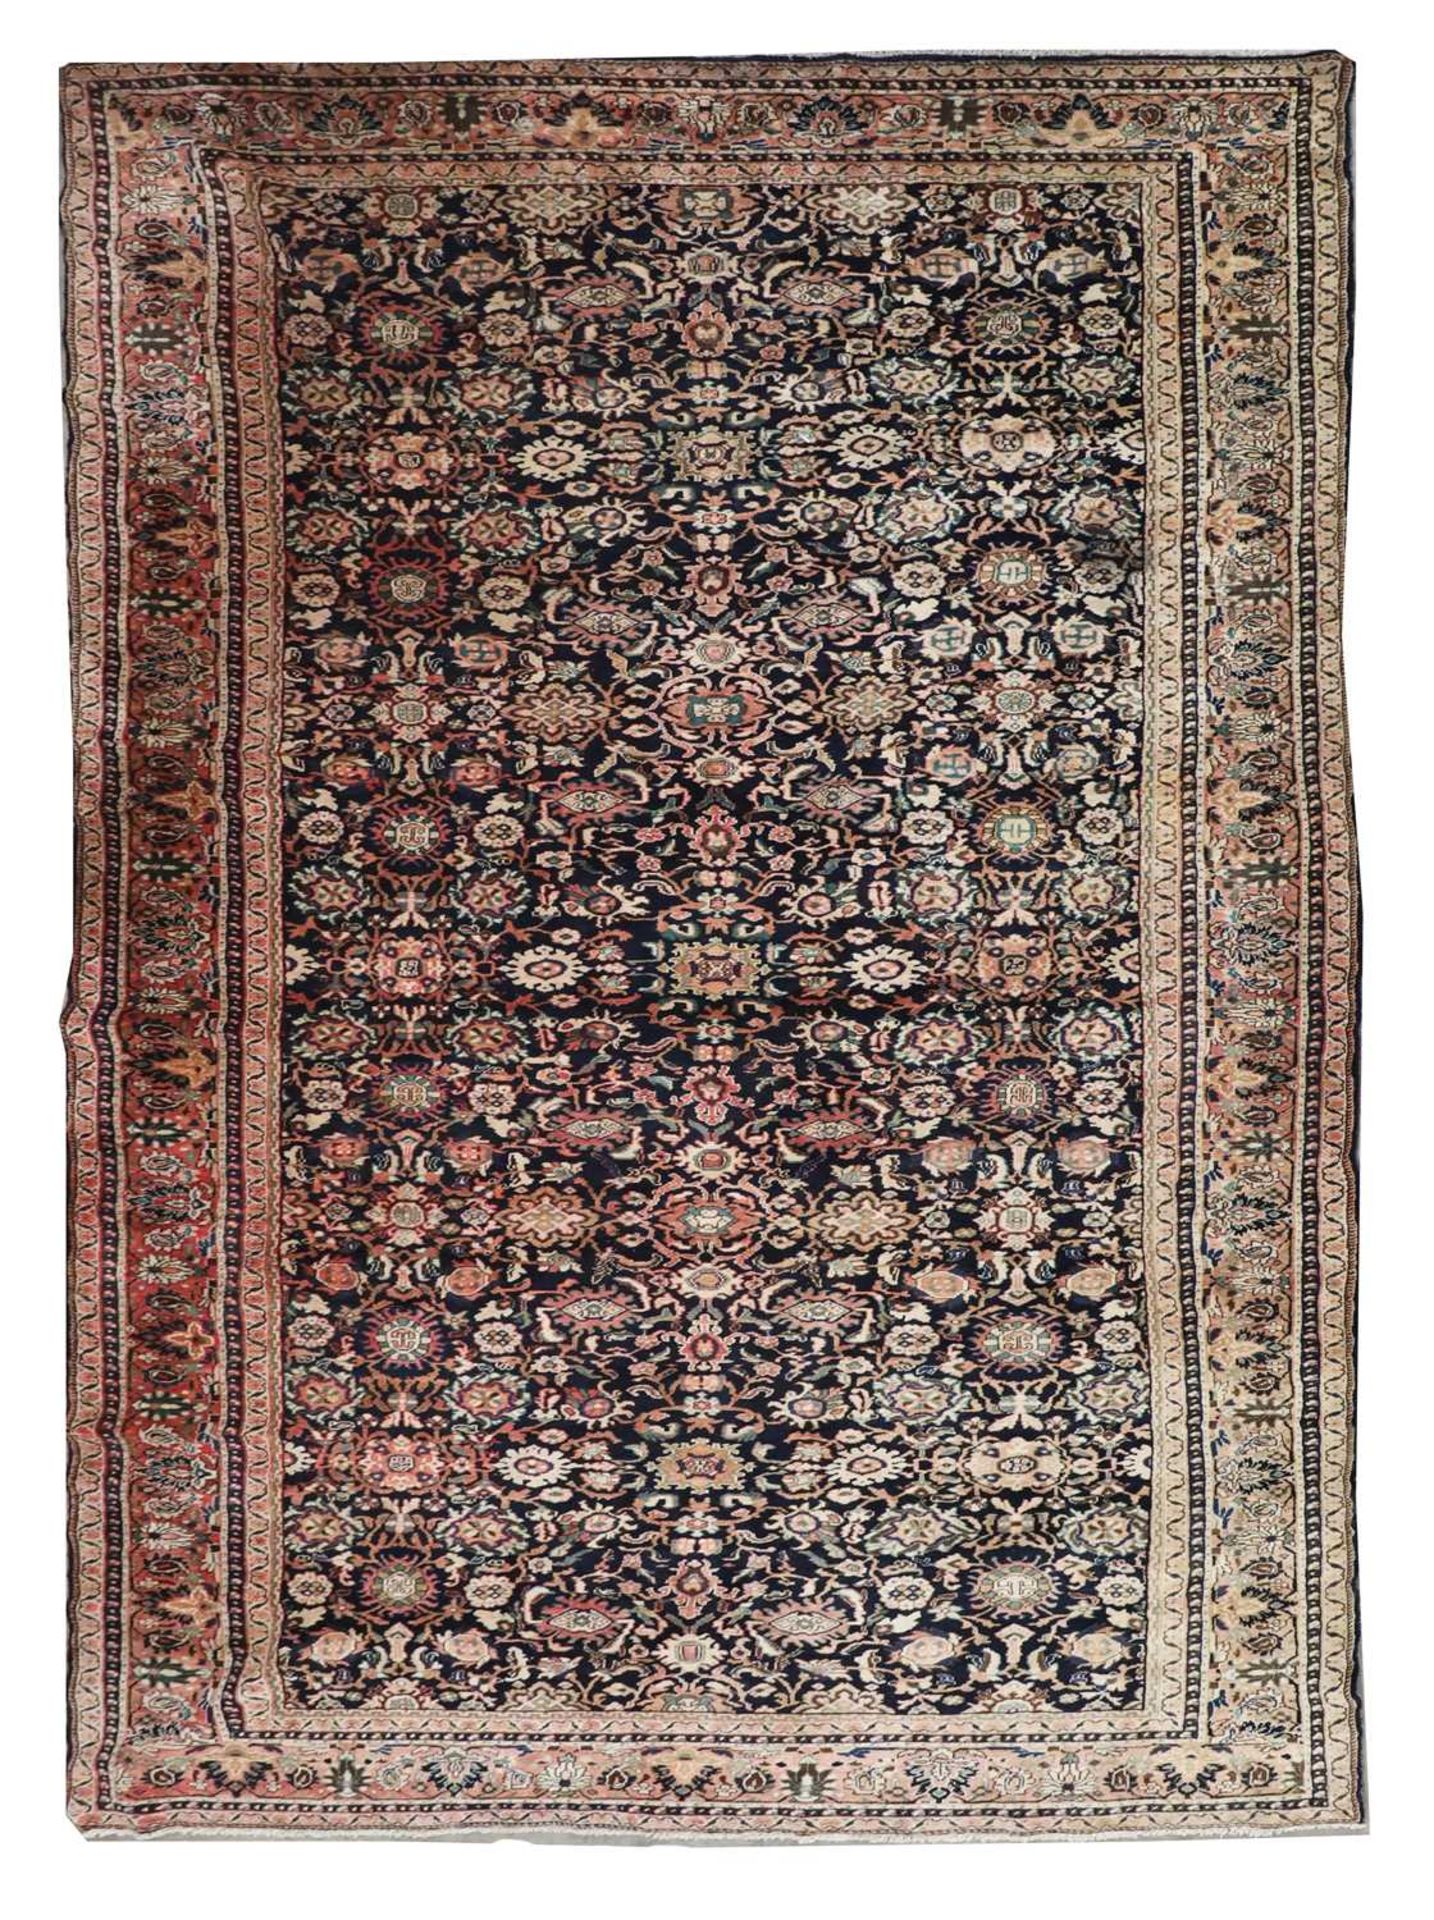 A Persian Bidjar carpet of Mahi design